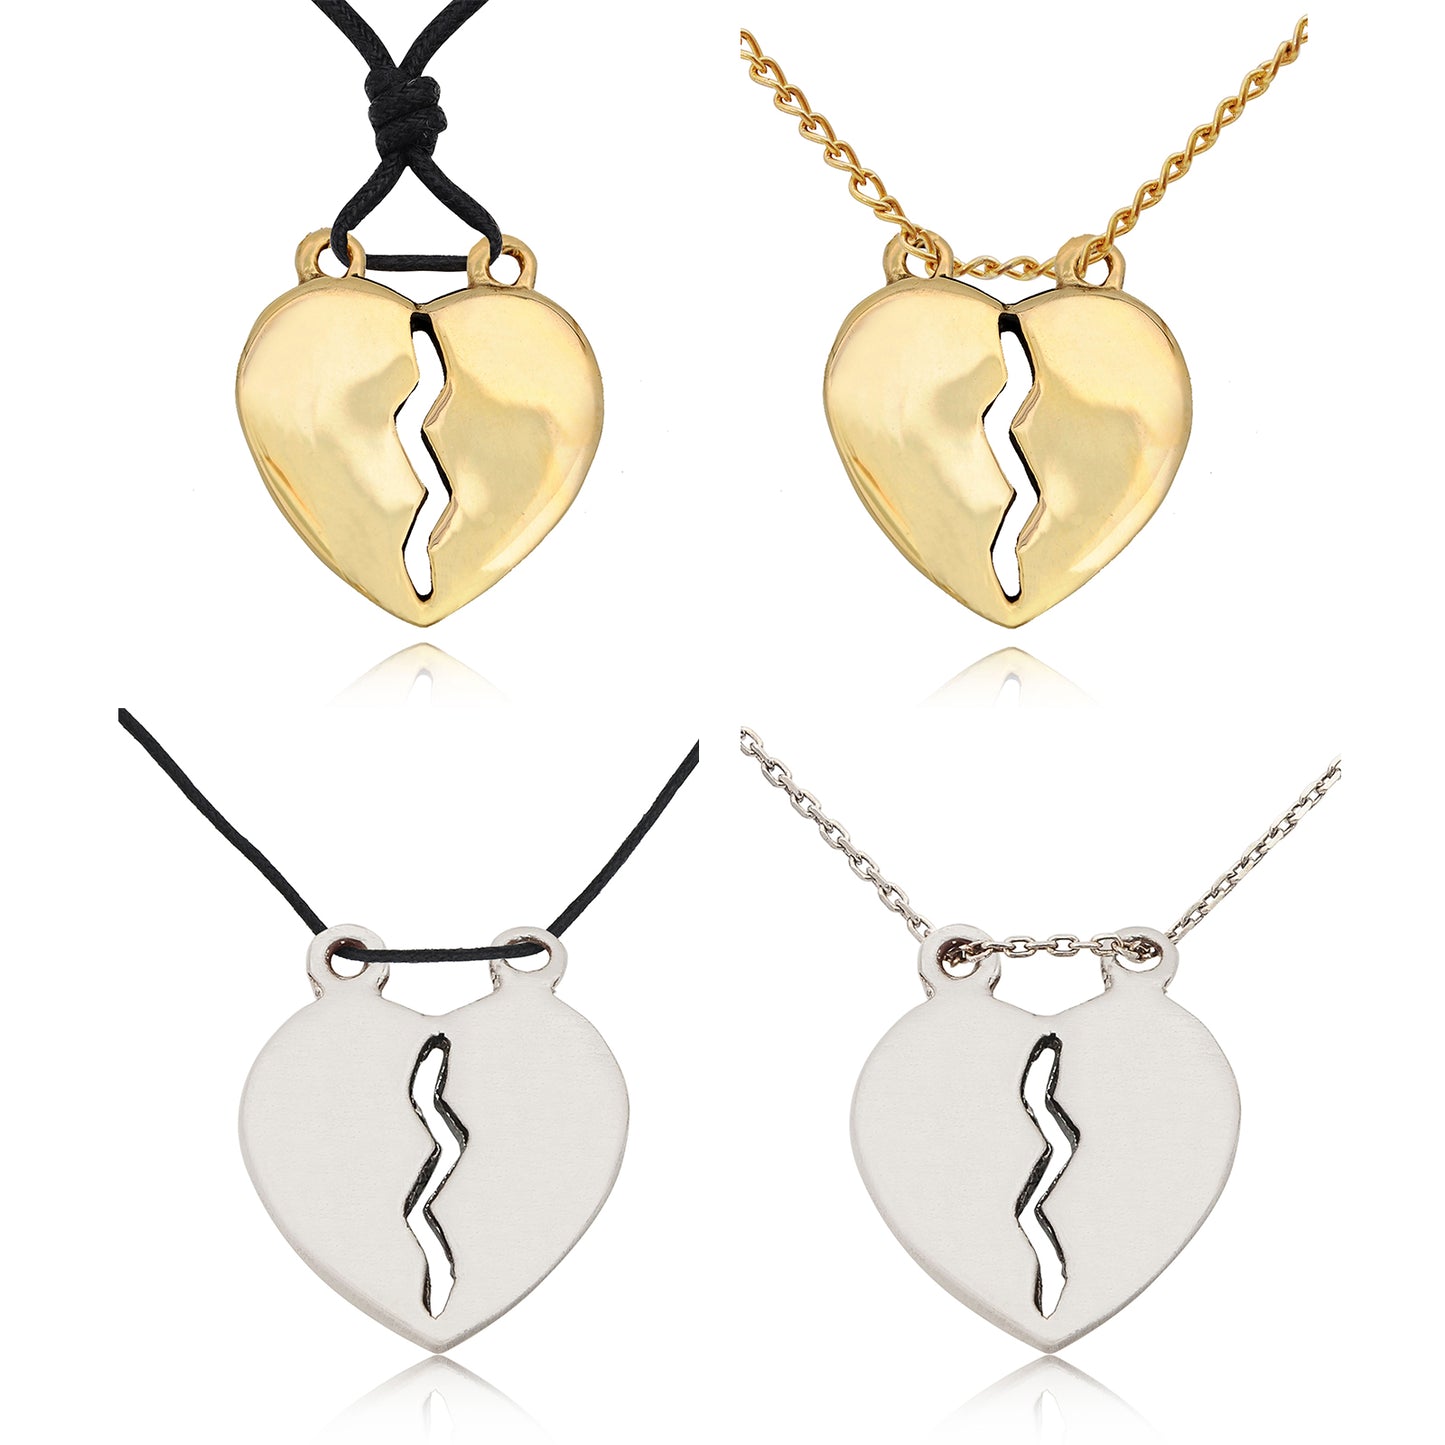 Love Heart Handmade Gold Brass Necklace Pendant Jewelry